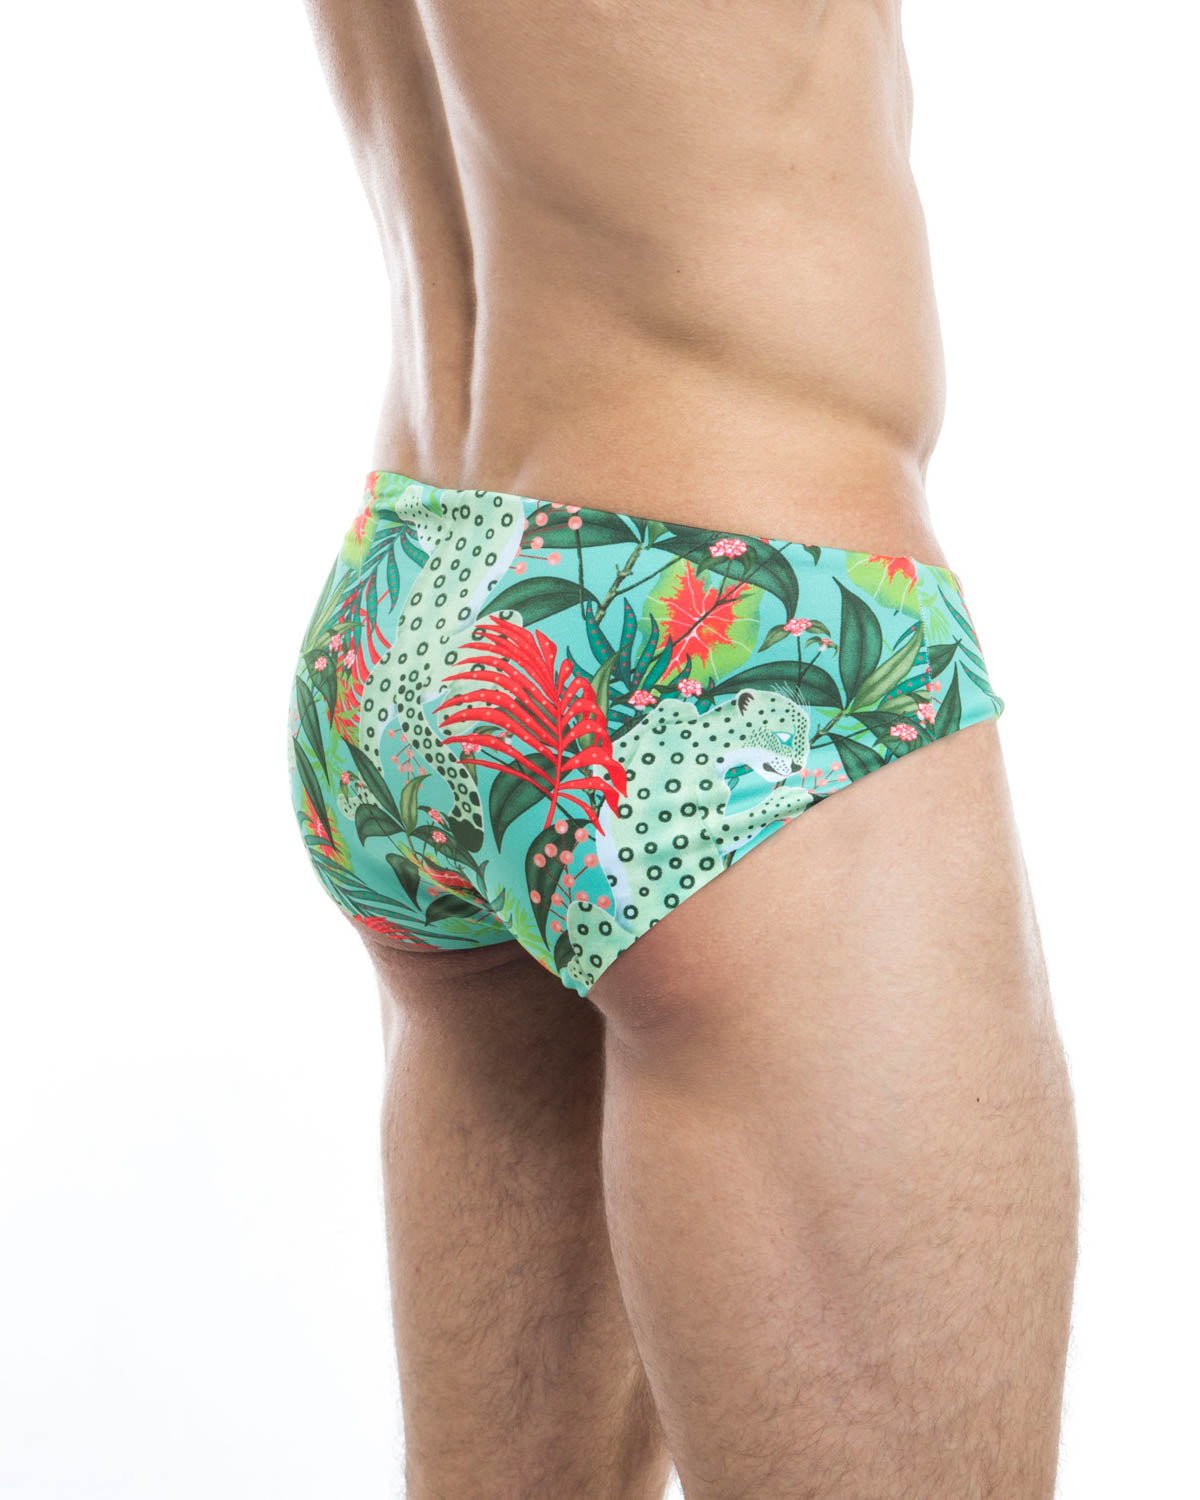 Men's swim briefs - HUNK2 Underwear Amazonia Reversible Swim Briefs available at MensUnderwear.io - Image 1